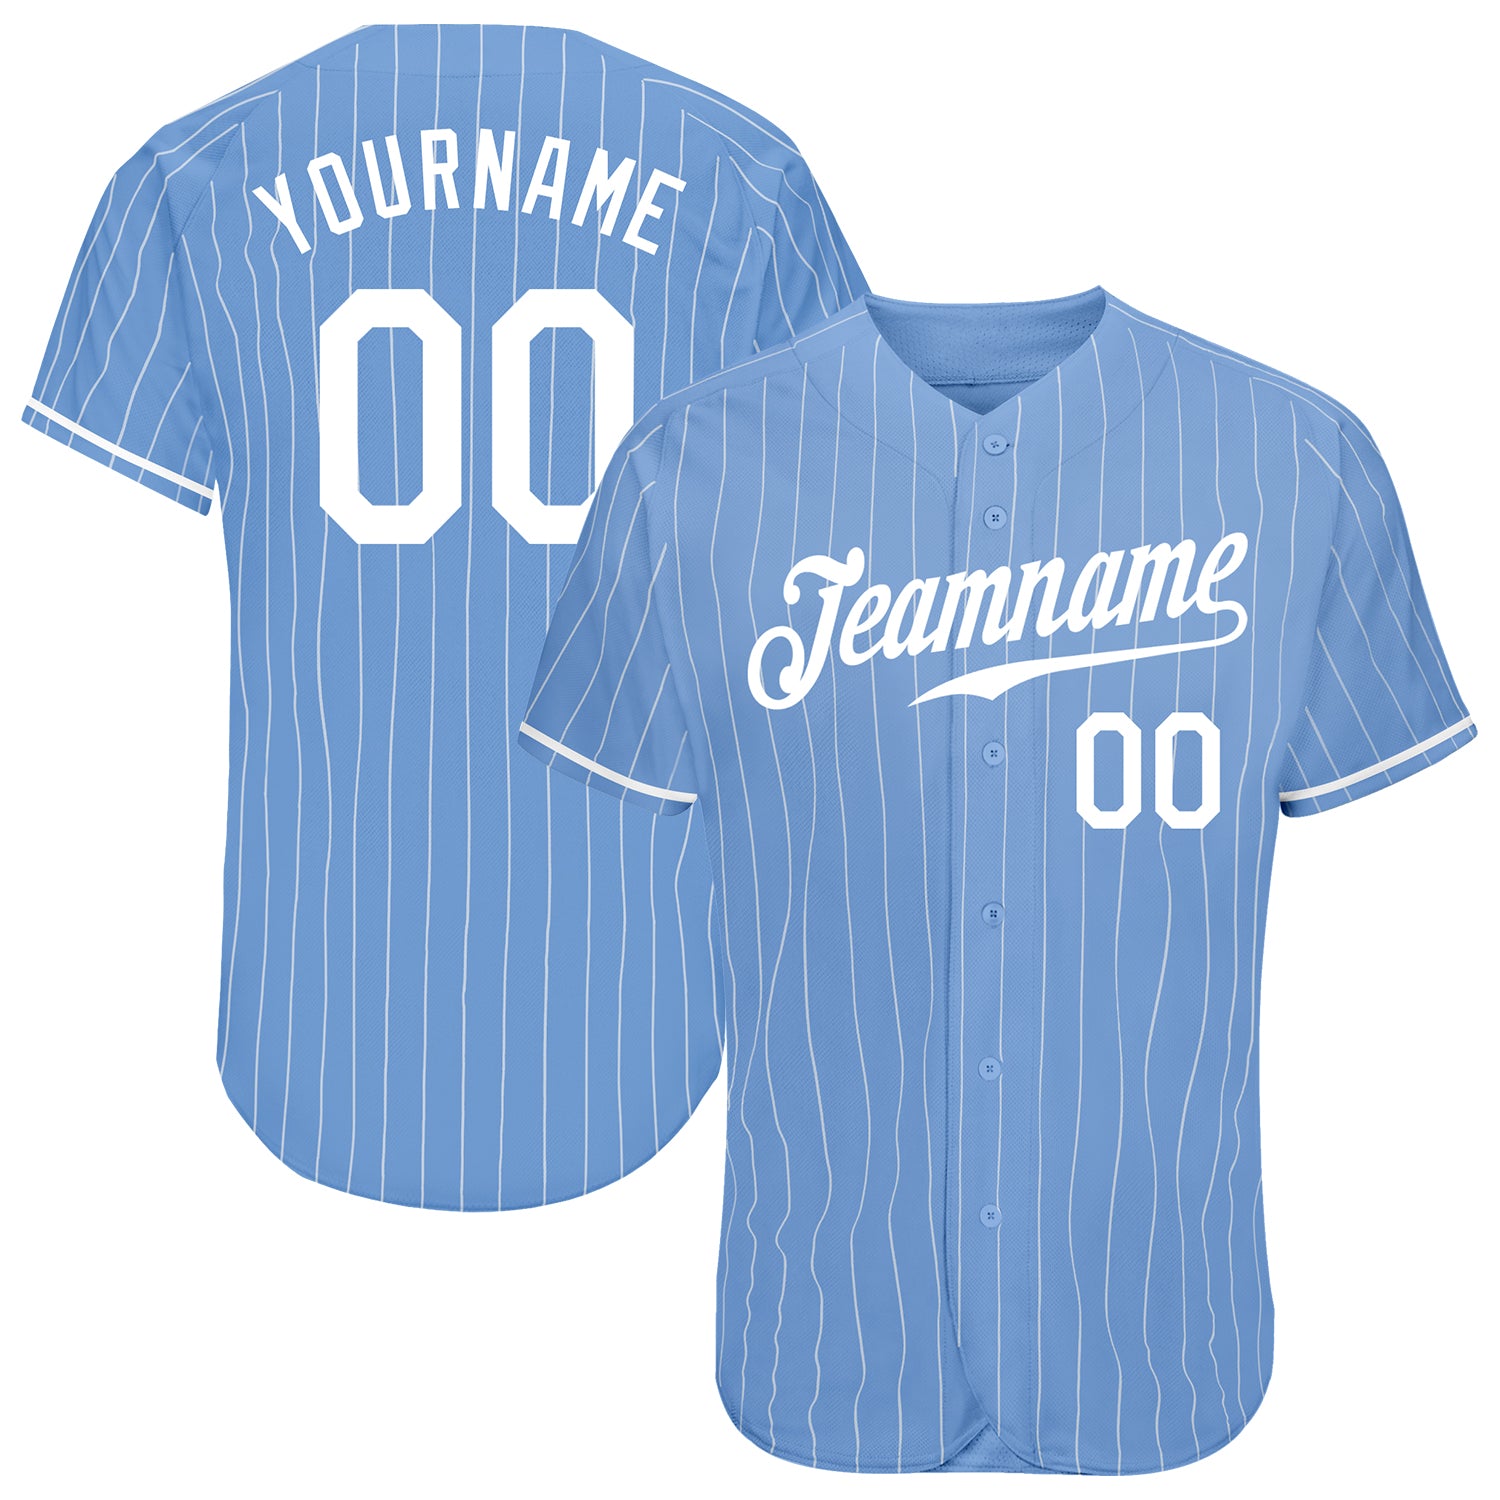  Custom Pinstripe Baseball Jersey Customized Softball